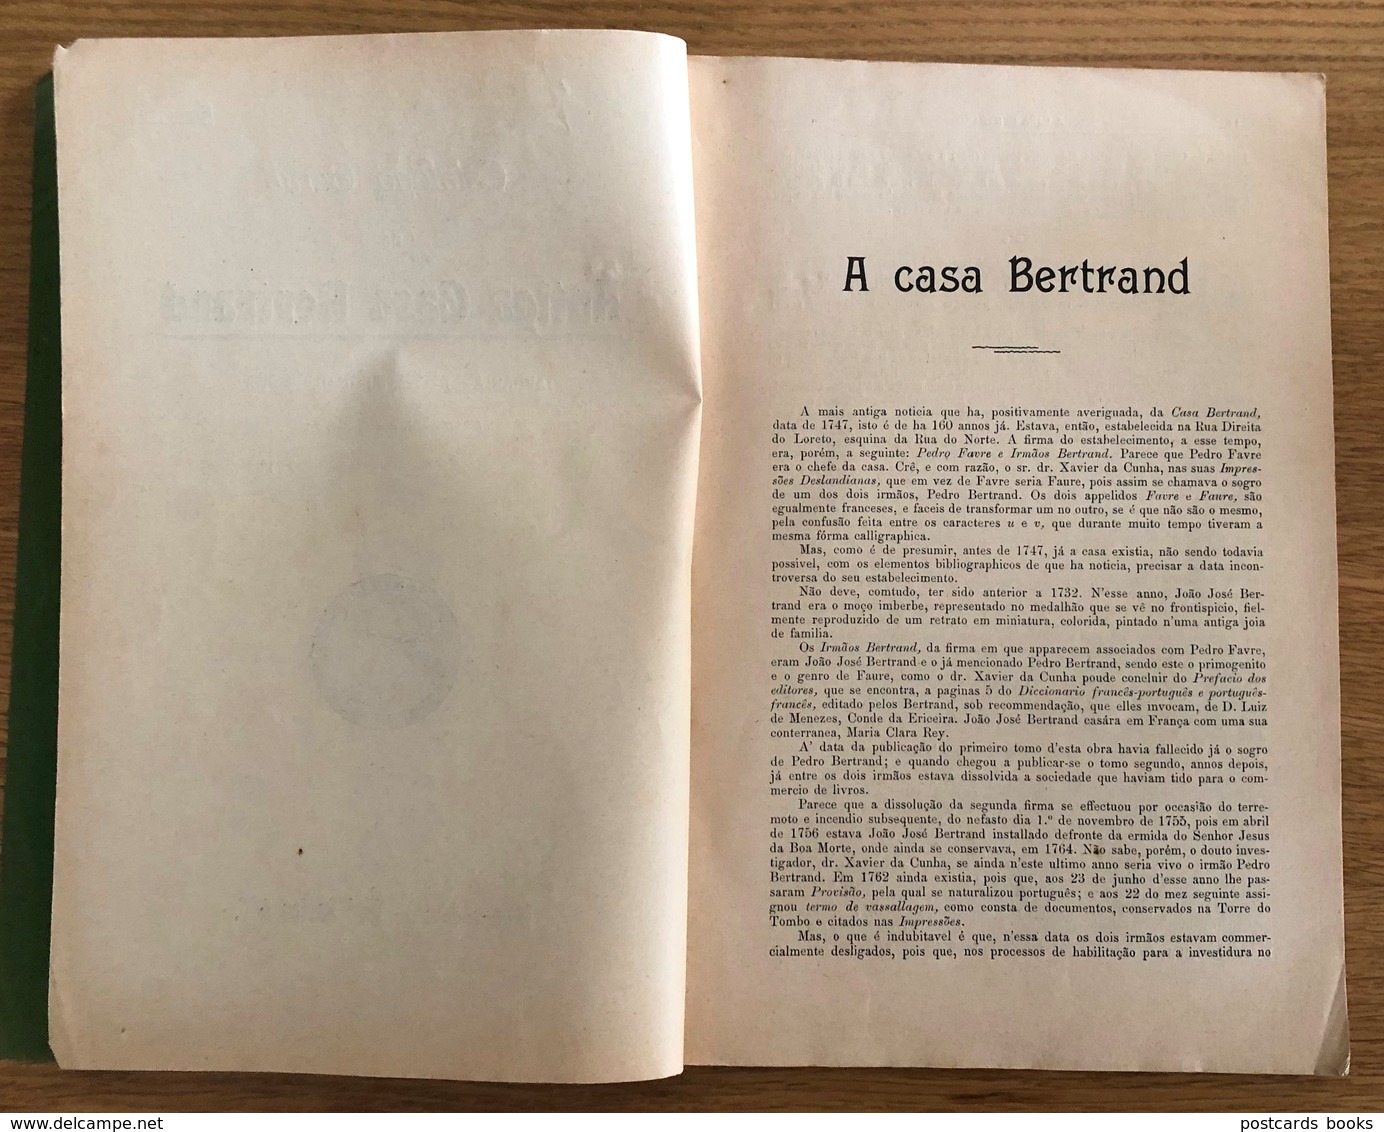 1907 Catalogo Geral Da ANTIGA CASA BERTRAND Livraria-Editora De 1732. Rua Garrett 73-75 LISBOA Portugal (115 Paginas) - Revues & Journaux